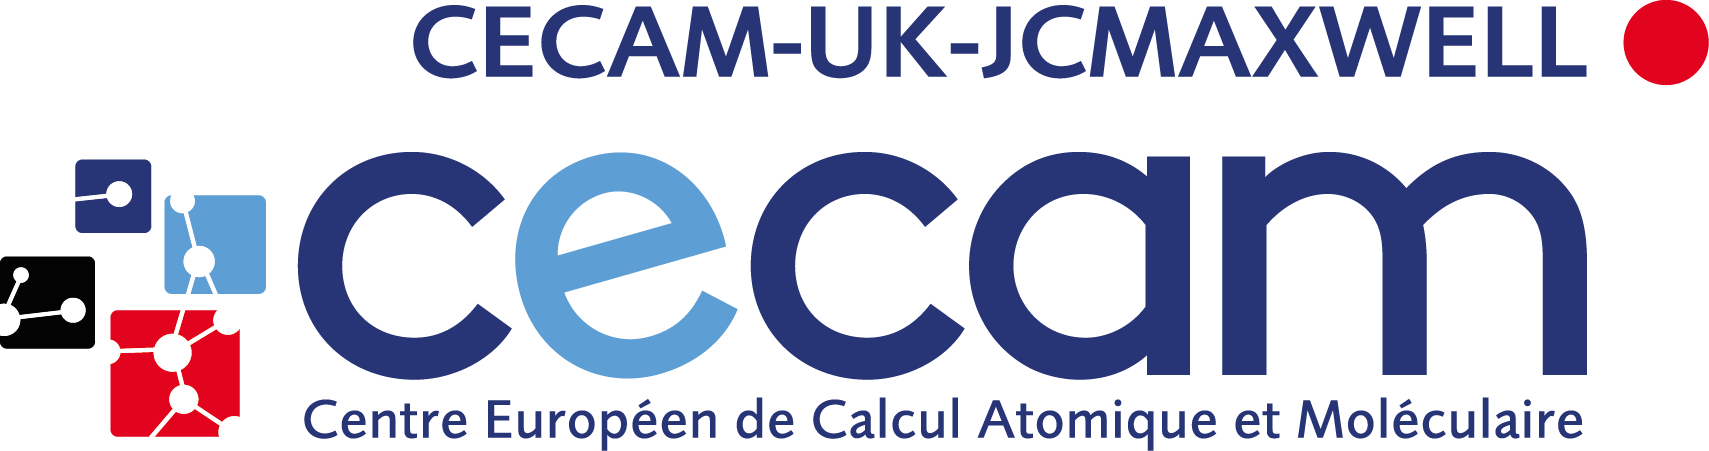 JCMaxwell Node of CECAM Logo